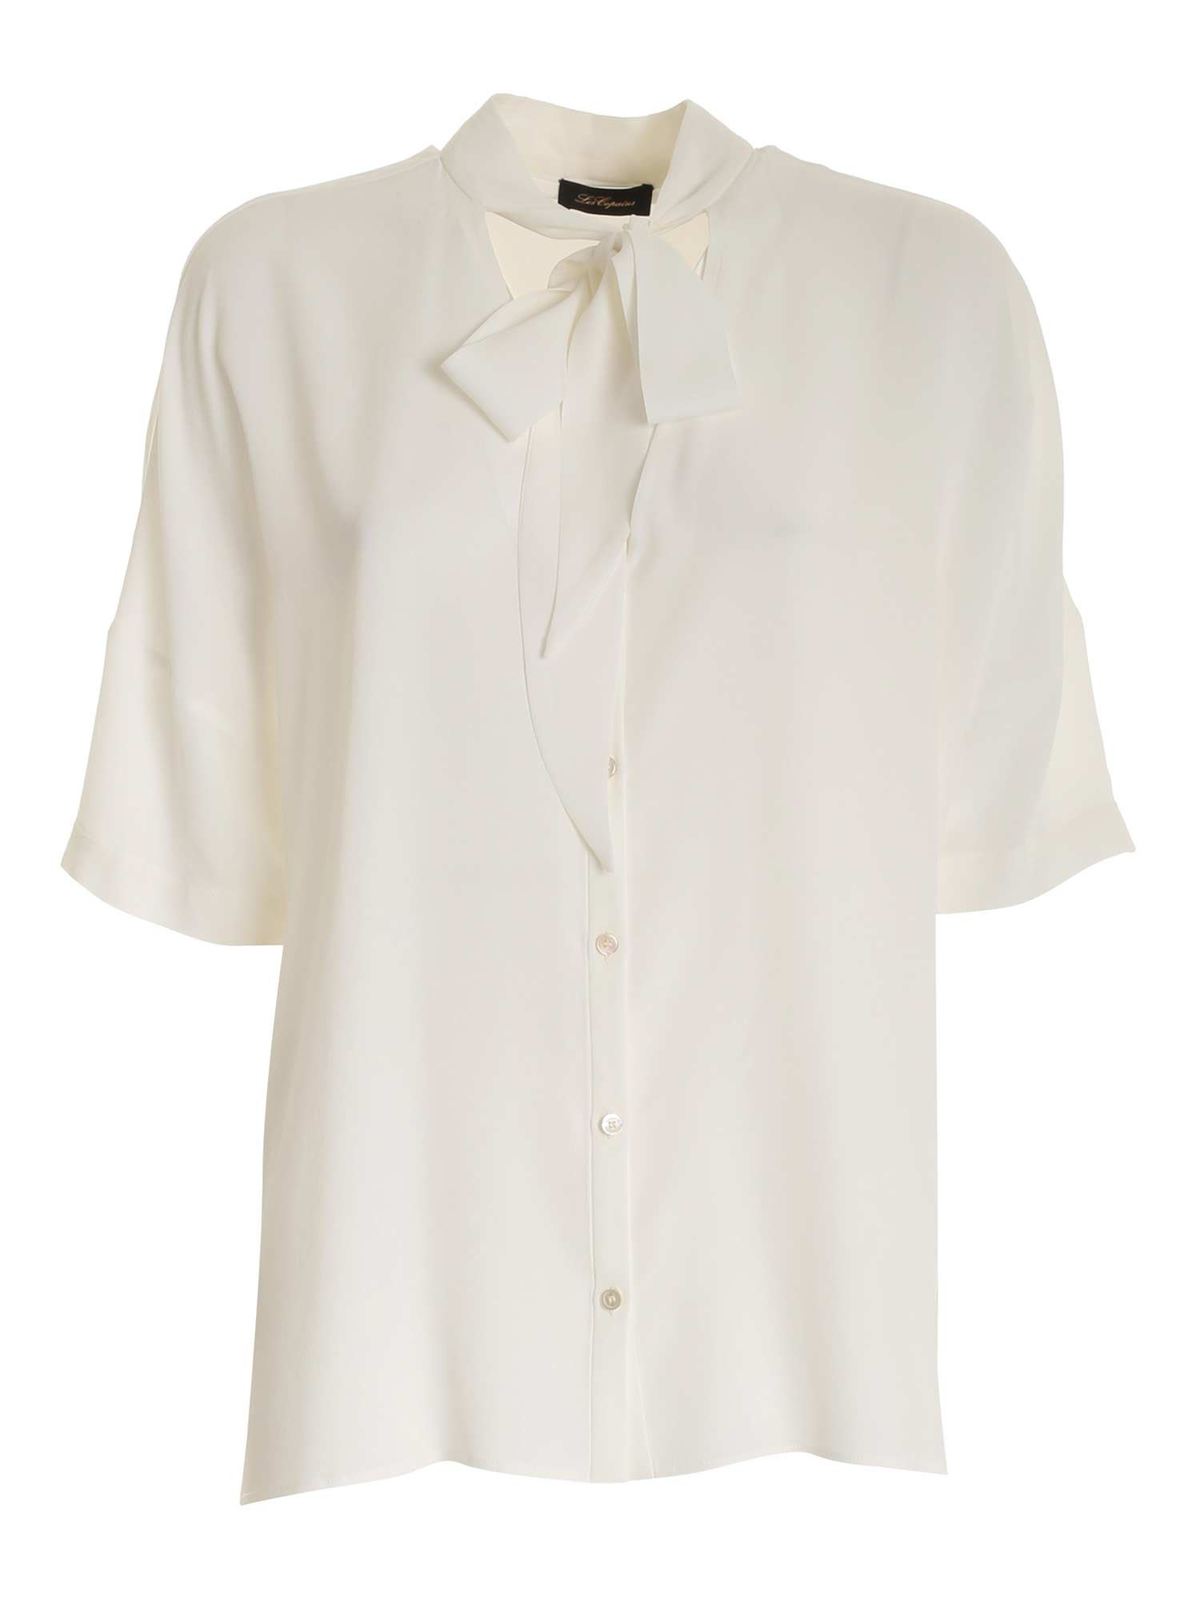 Les Copains Ribbon Shirt In White